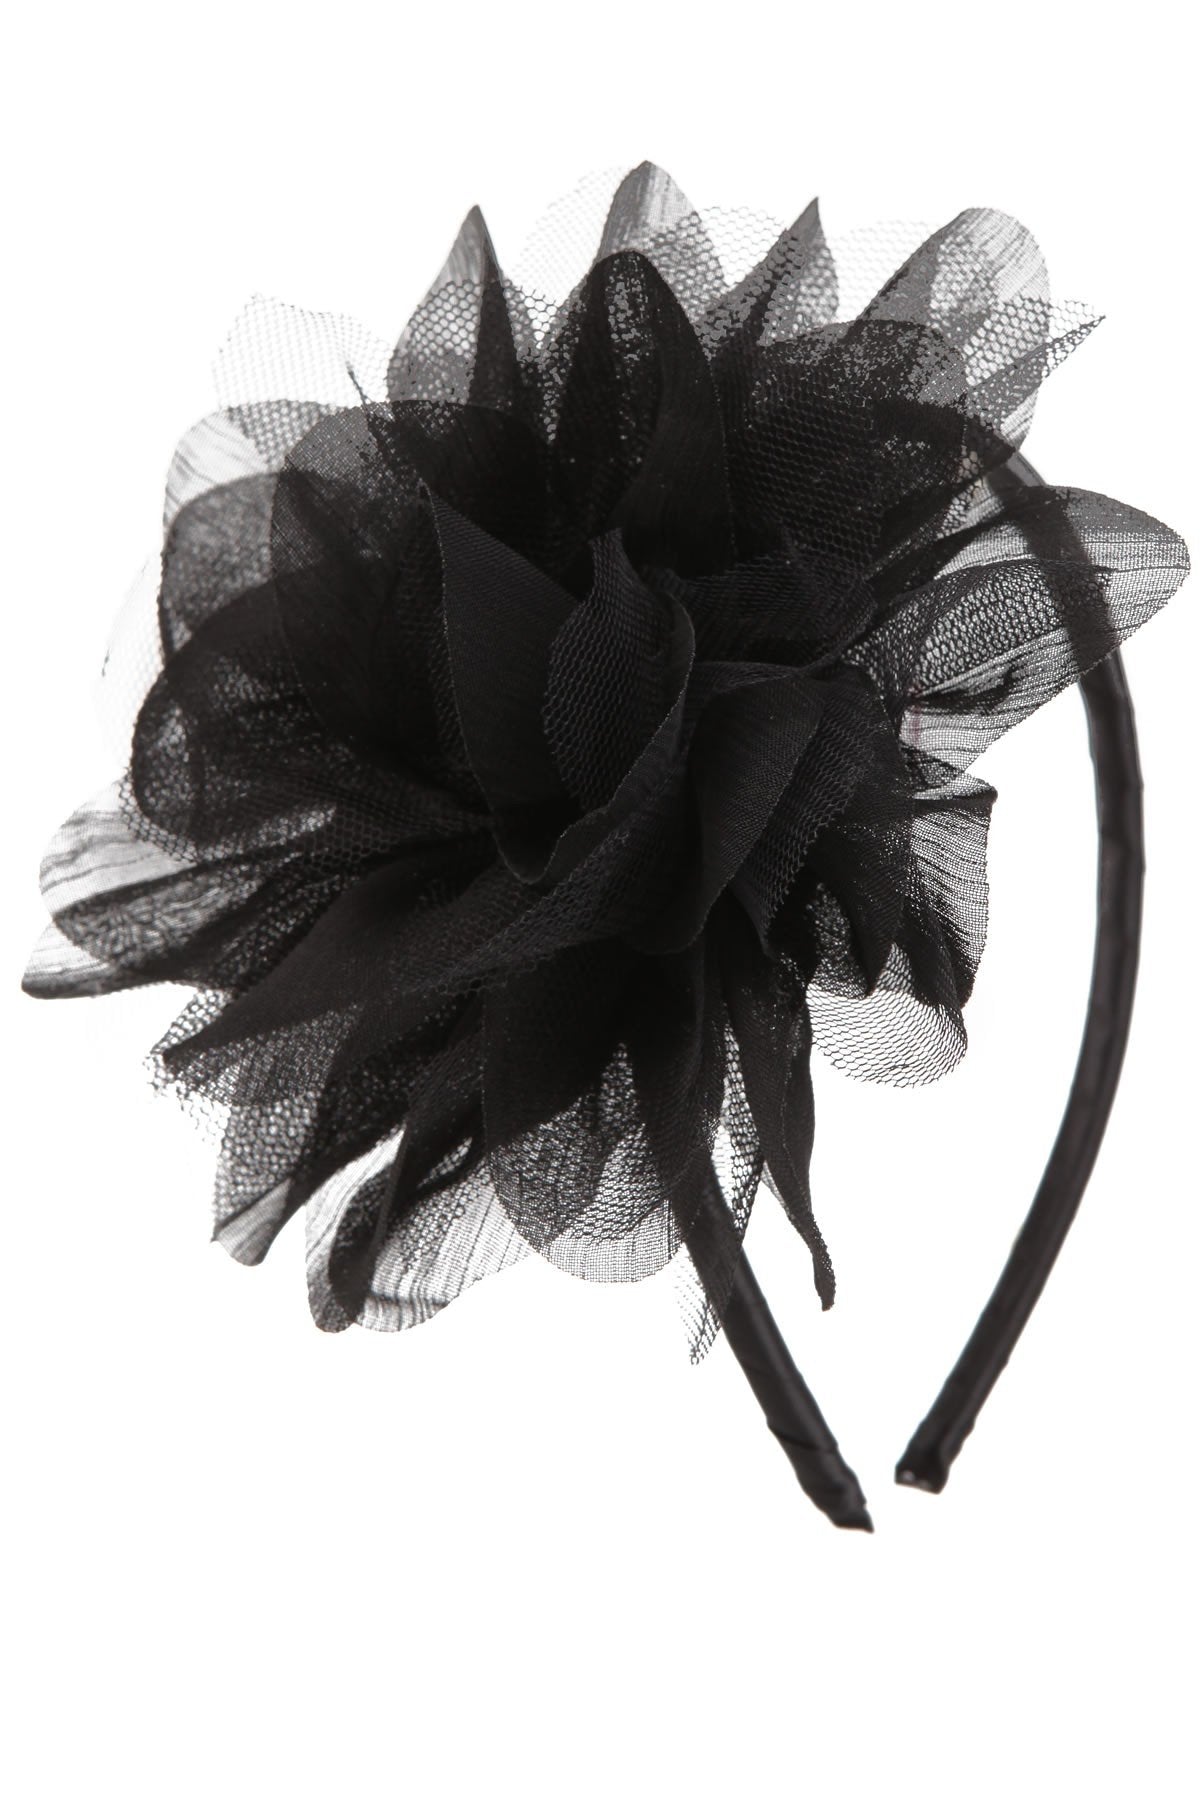 Accessories - Mesh Flower Headband